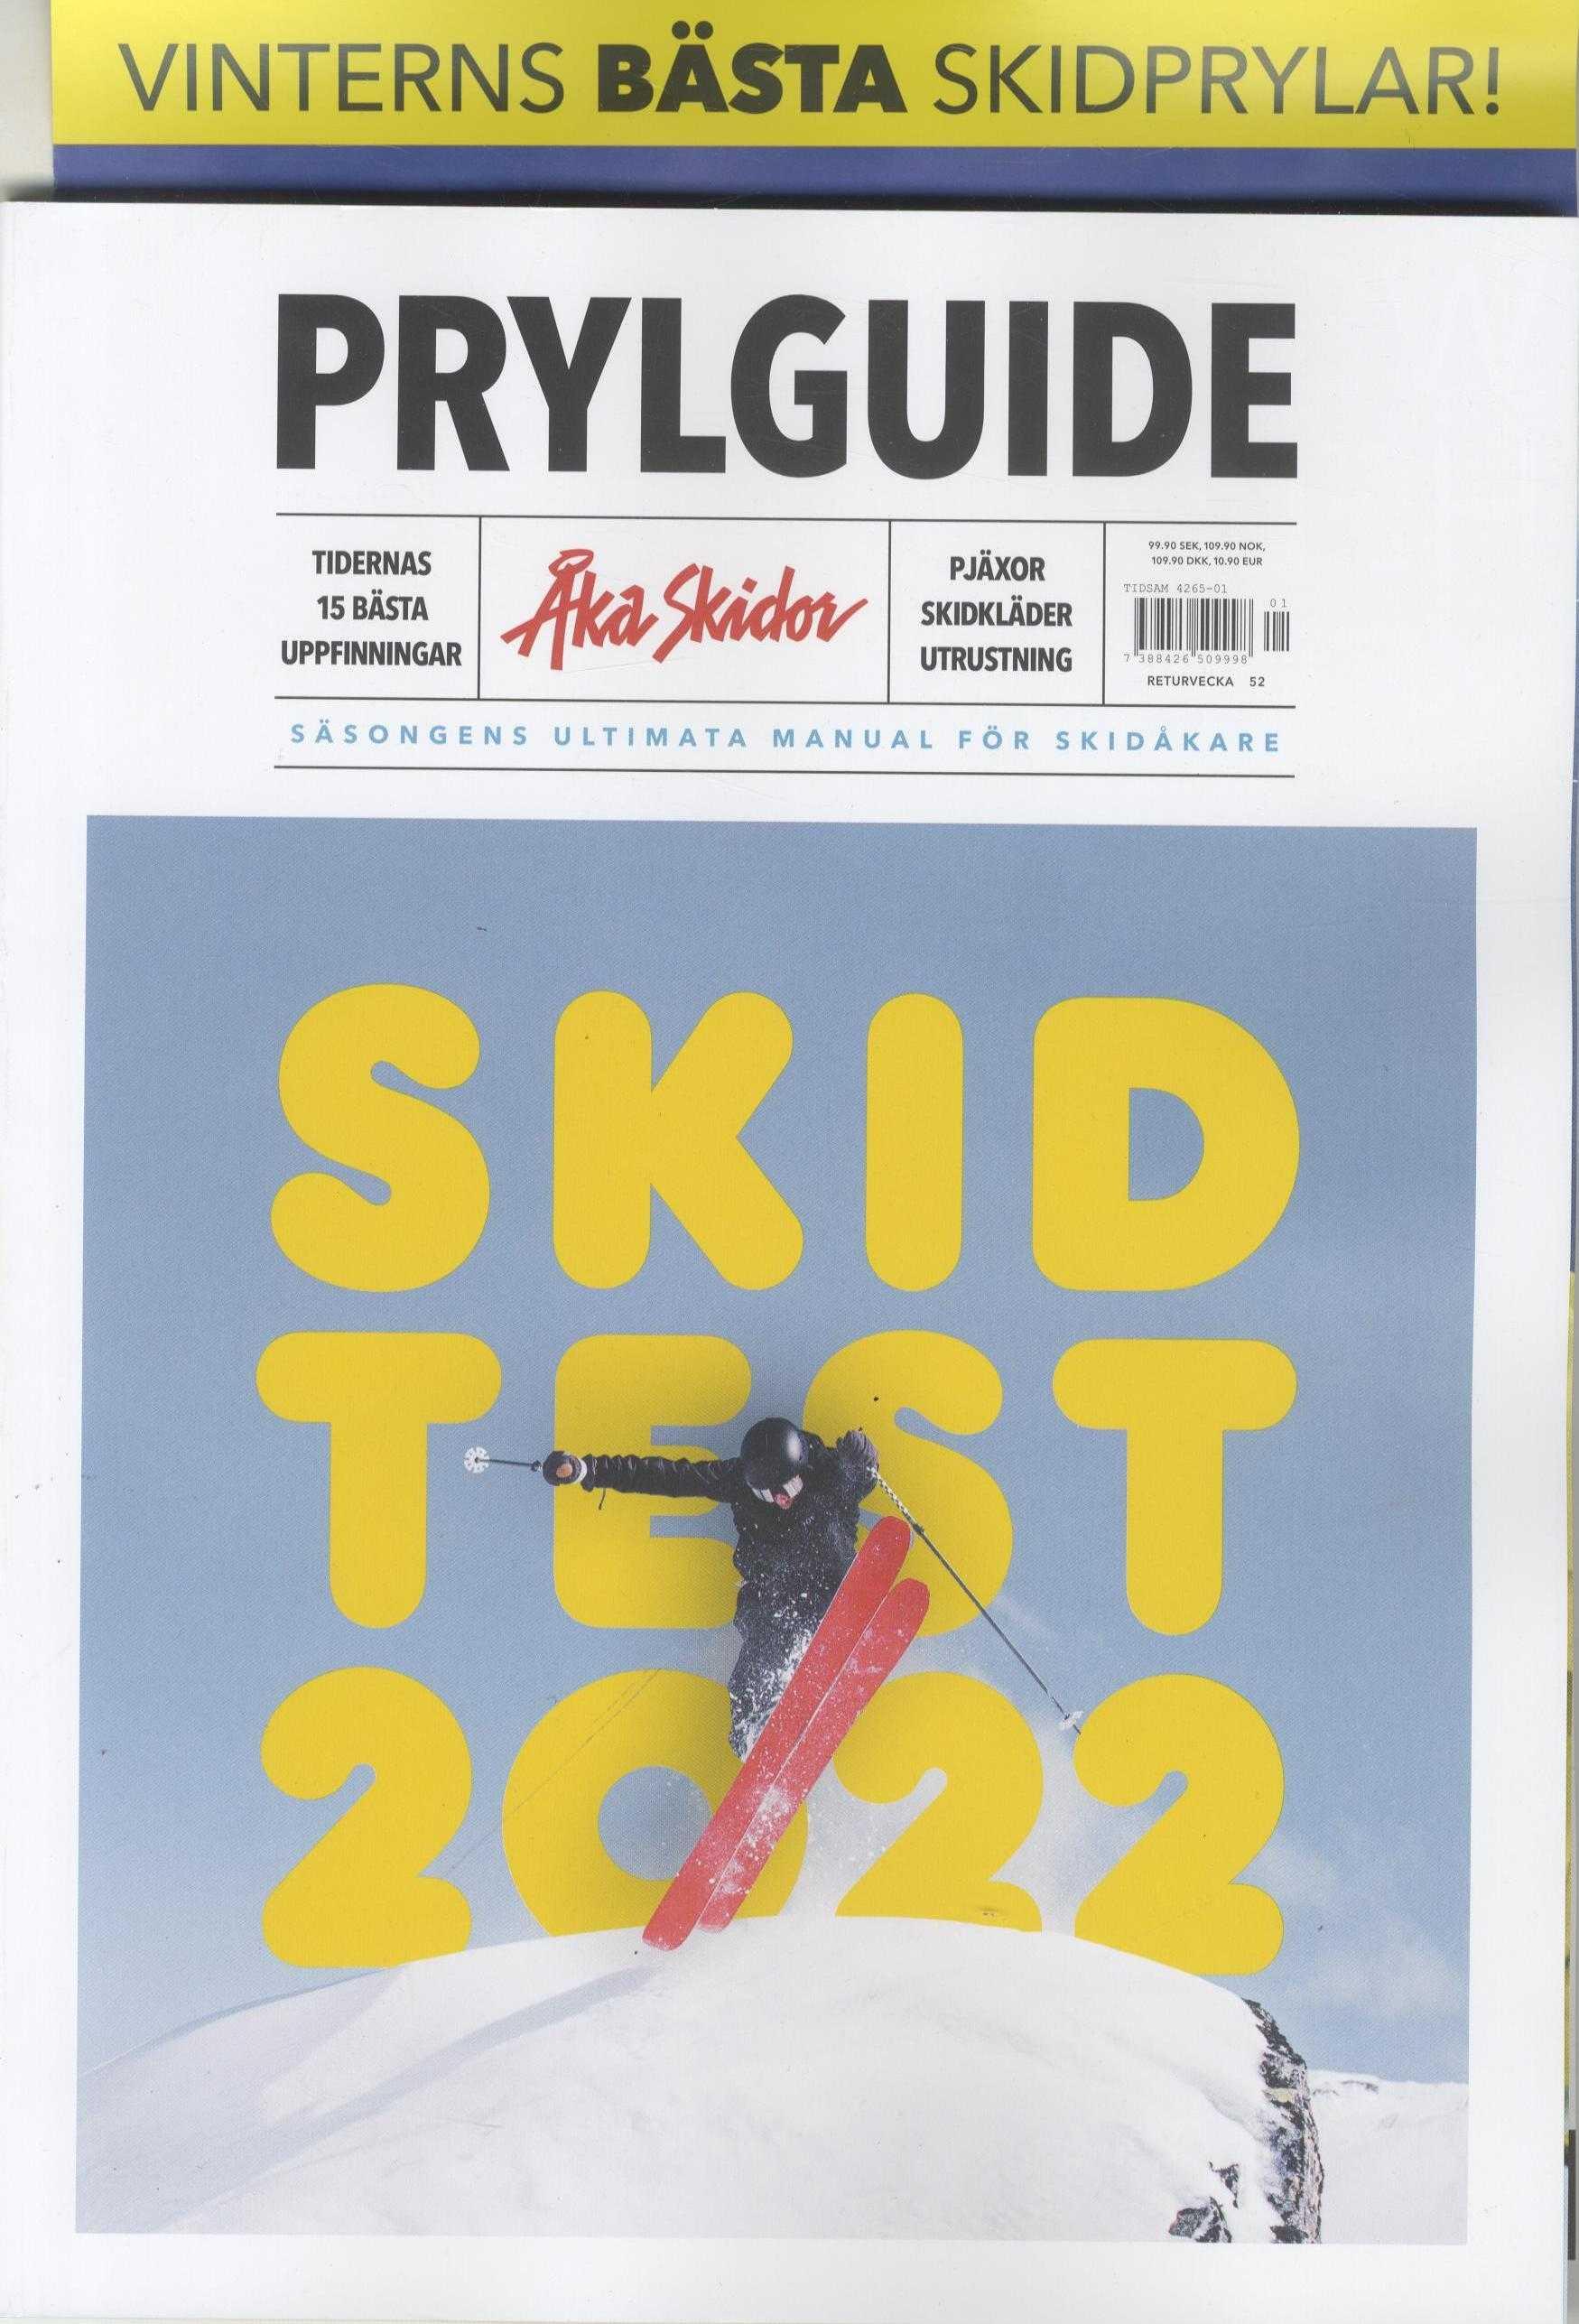 Prylguide Åka skidor